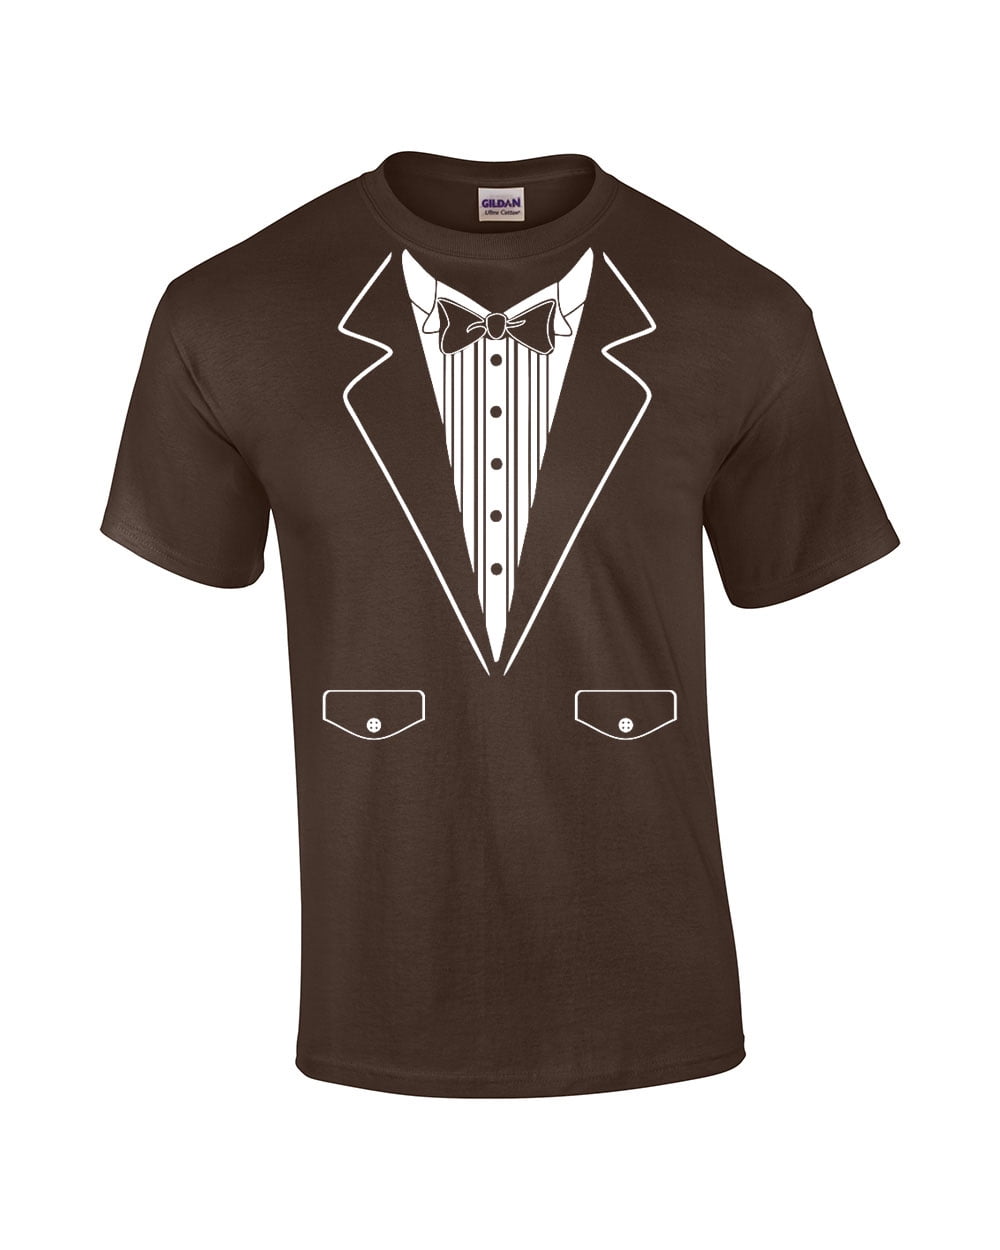 Formal Tuxedo with Bowtie Classy Men's Sleeve T-shirt Humorous Wedding Bachelor Party Retro Tee-Black-XXXL -